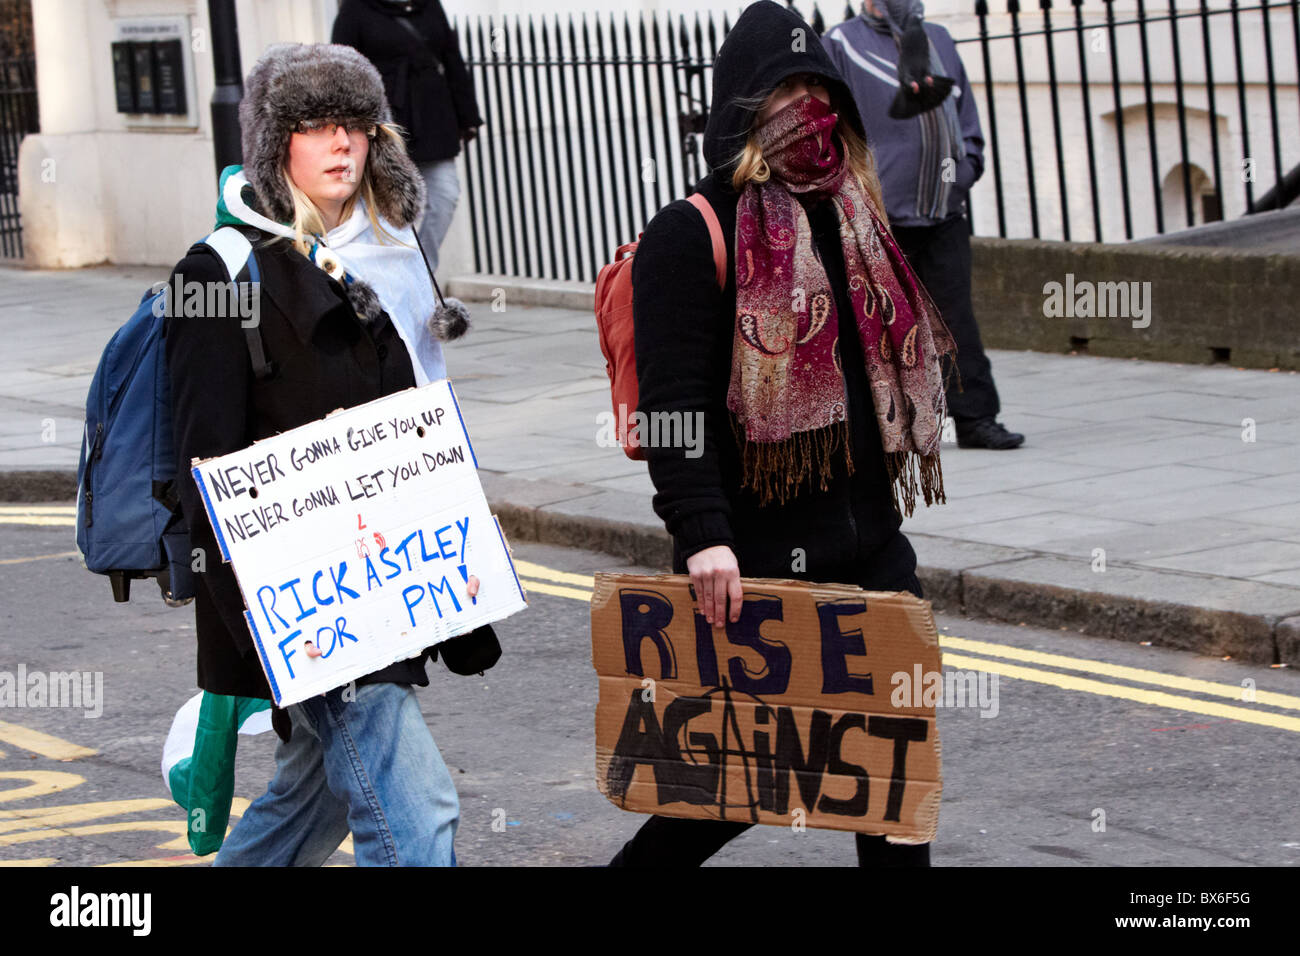 Demonstranten mit Plakaten bei studentischen Protest gegen Studiengebühren Stockfoto